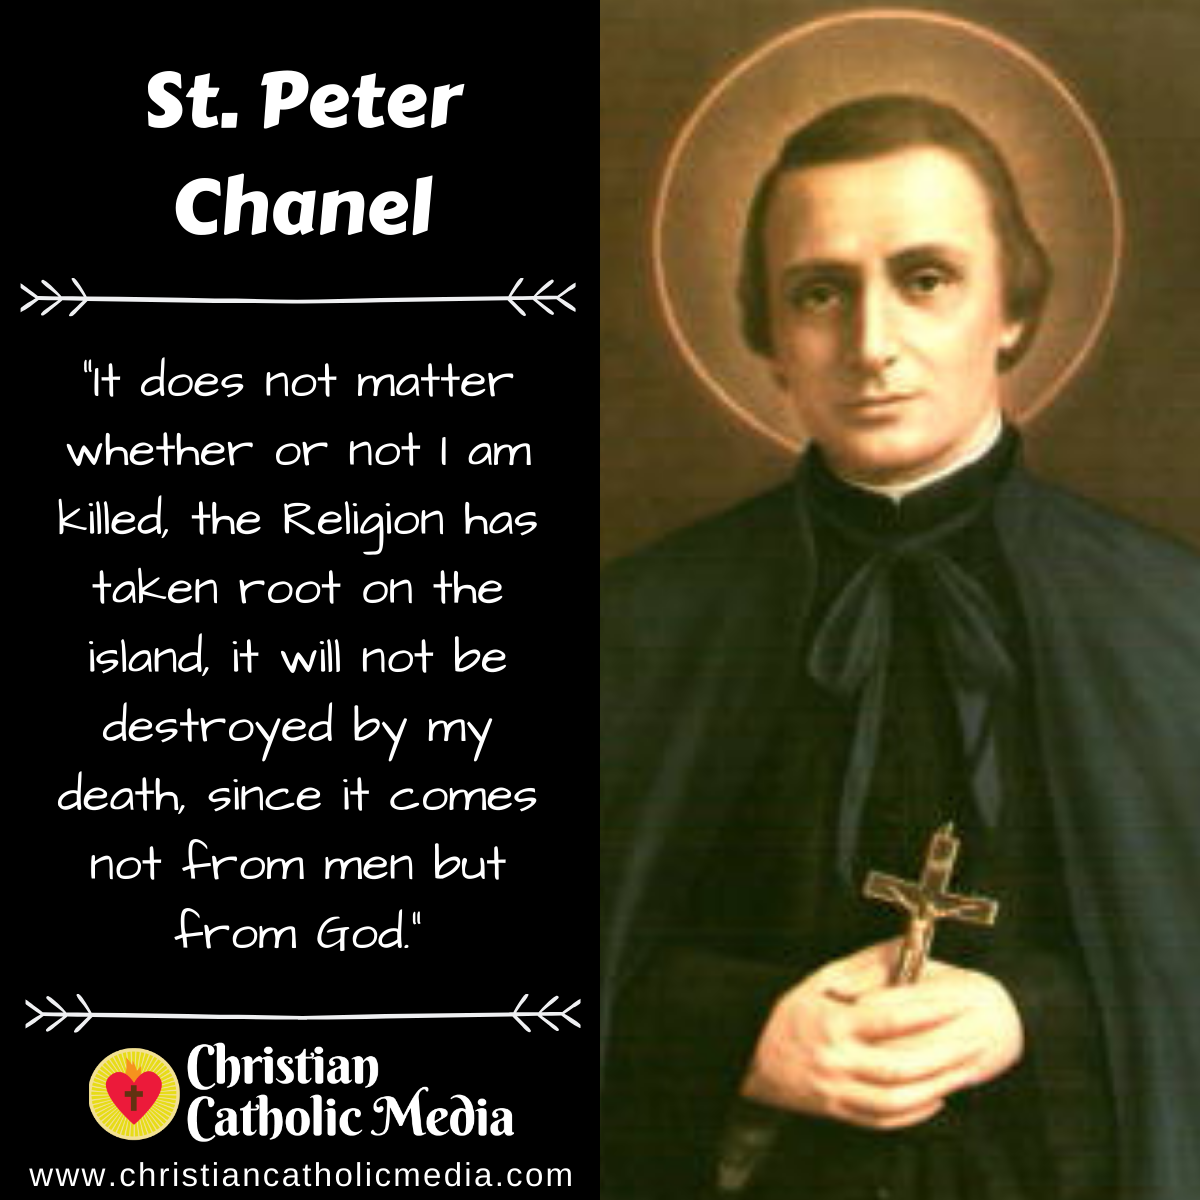 St. Peter Chanel – Christian Catholic Media